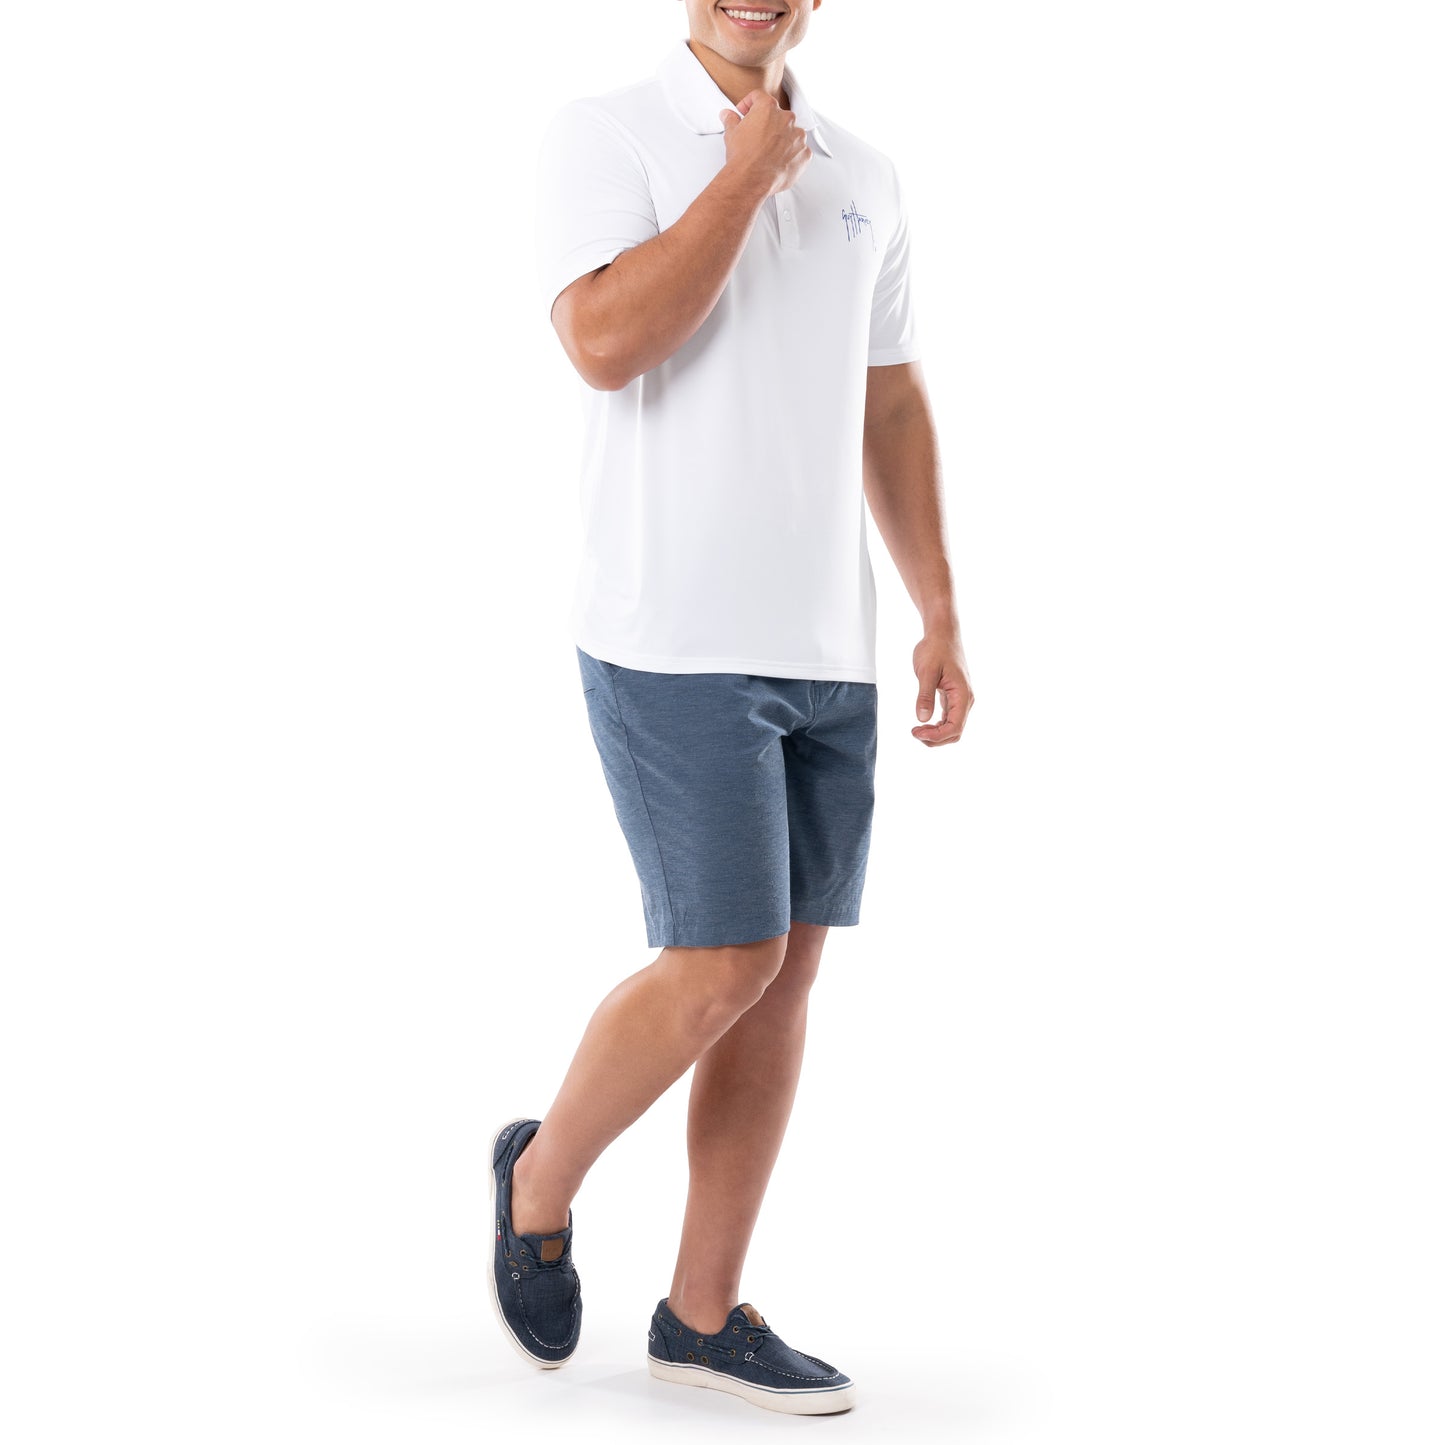 Men's Short Sleeve Performance Polo Shirt